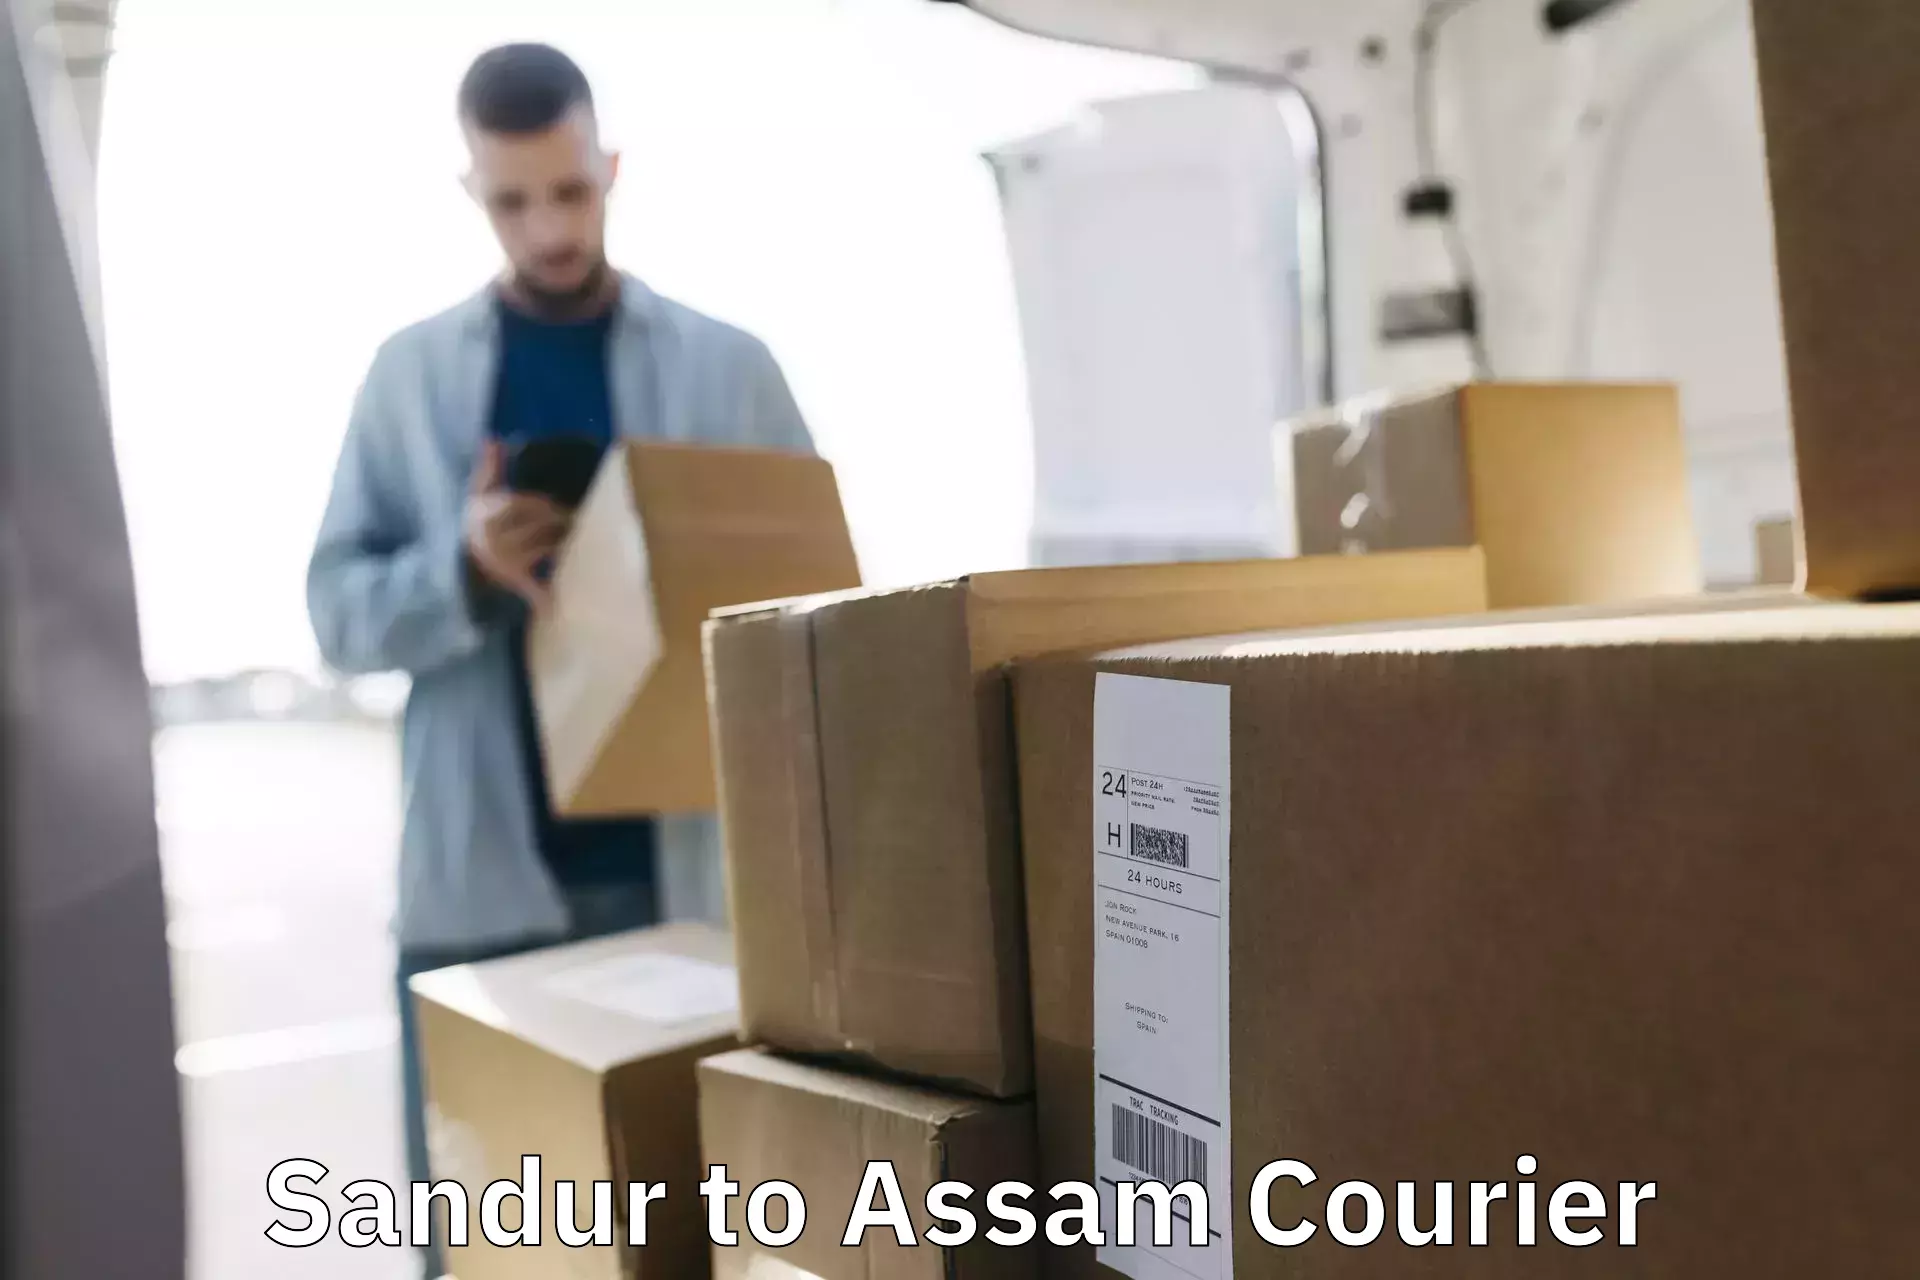 Professional courier handling Sandur to Nagaon